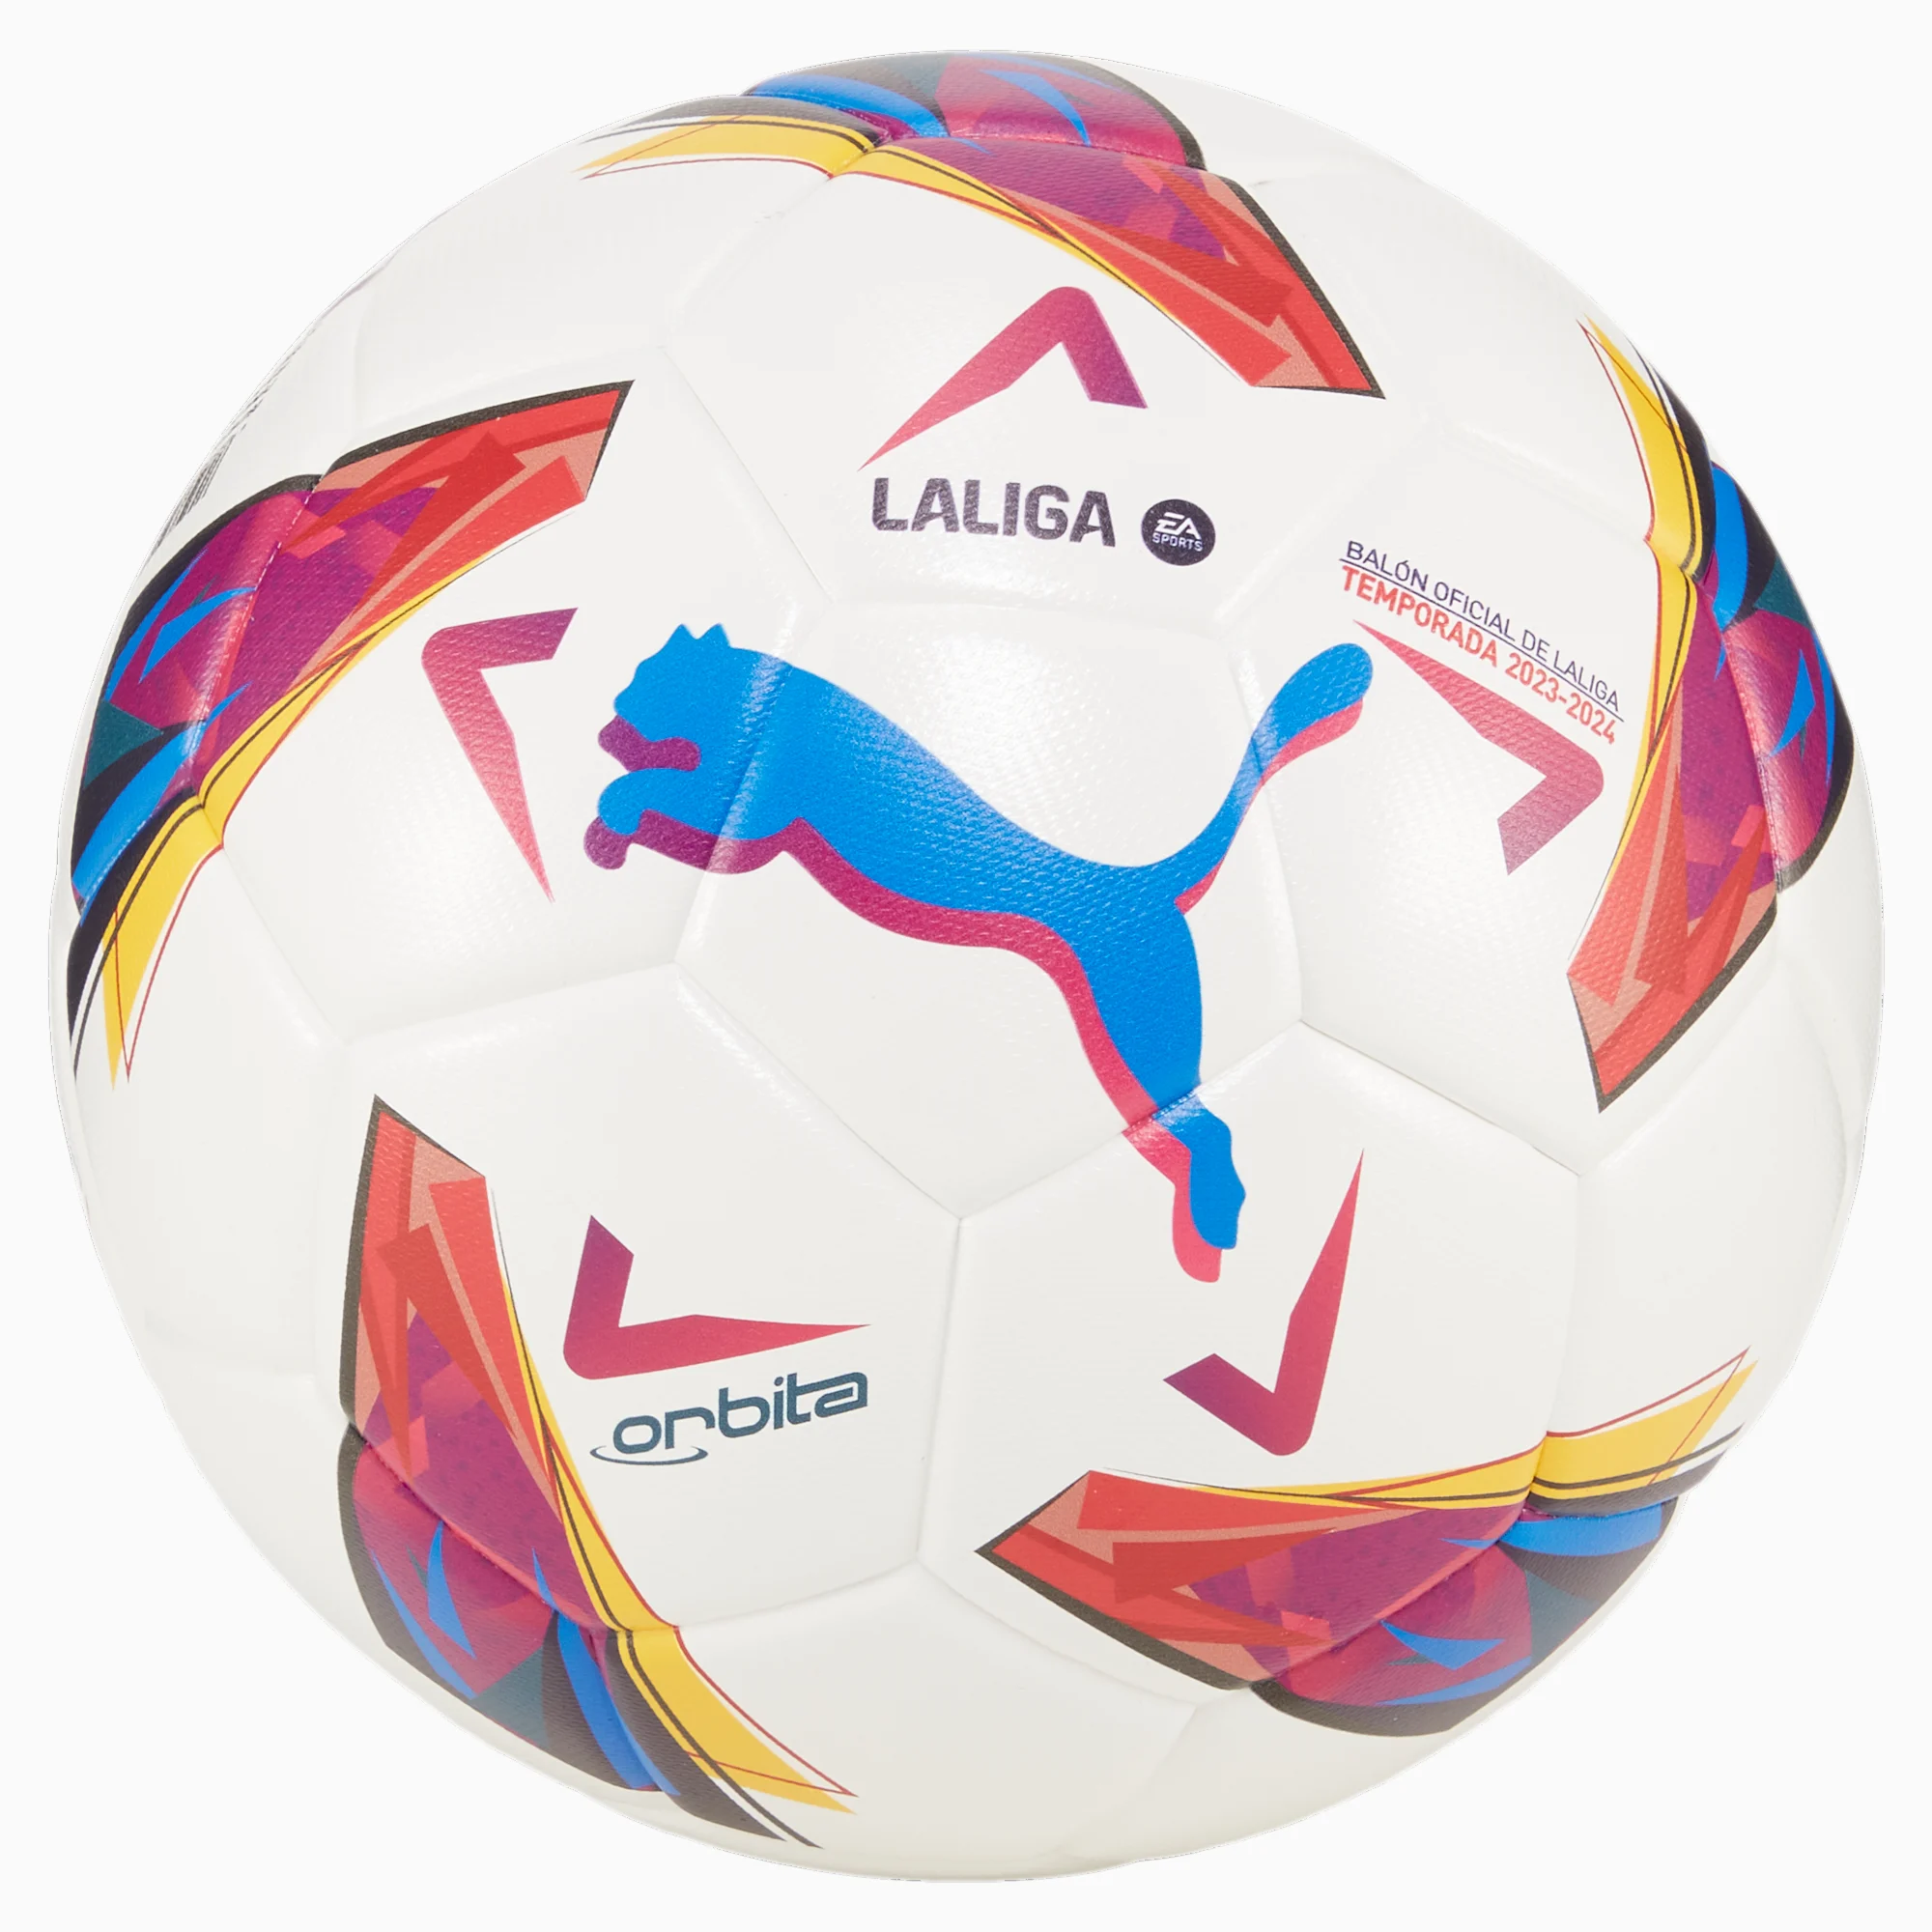 Puma Orbita LaLiga 1 FIFA Quality Soccer Ball 23/24